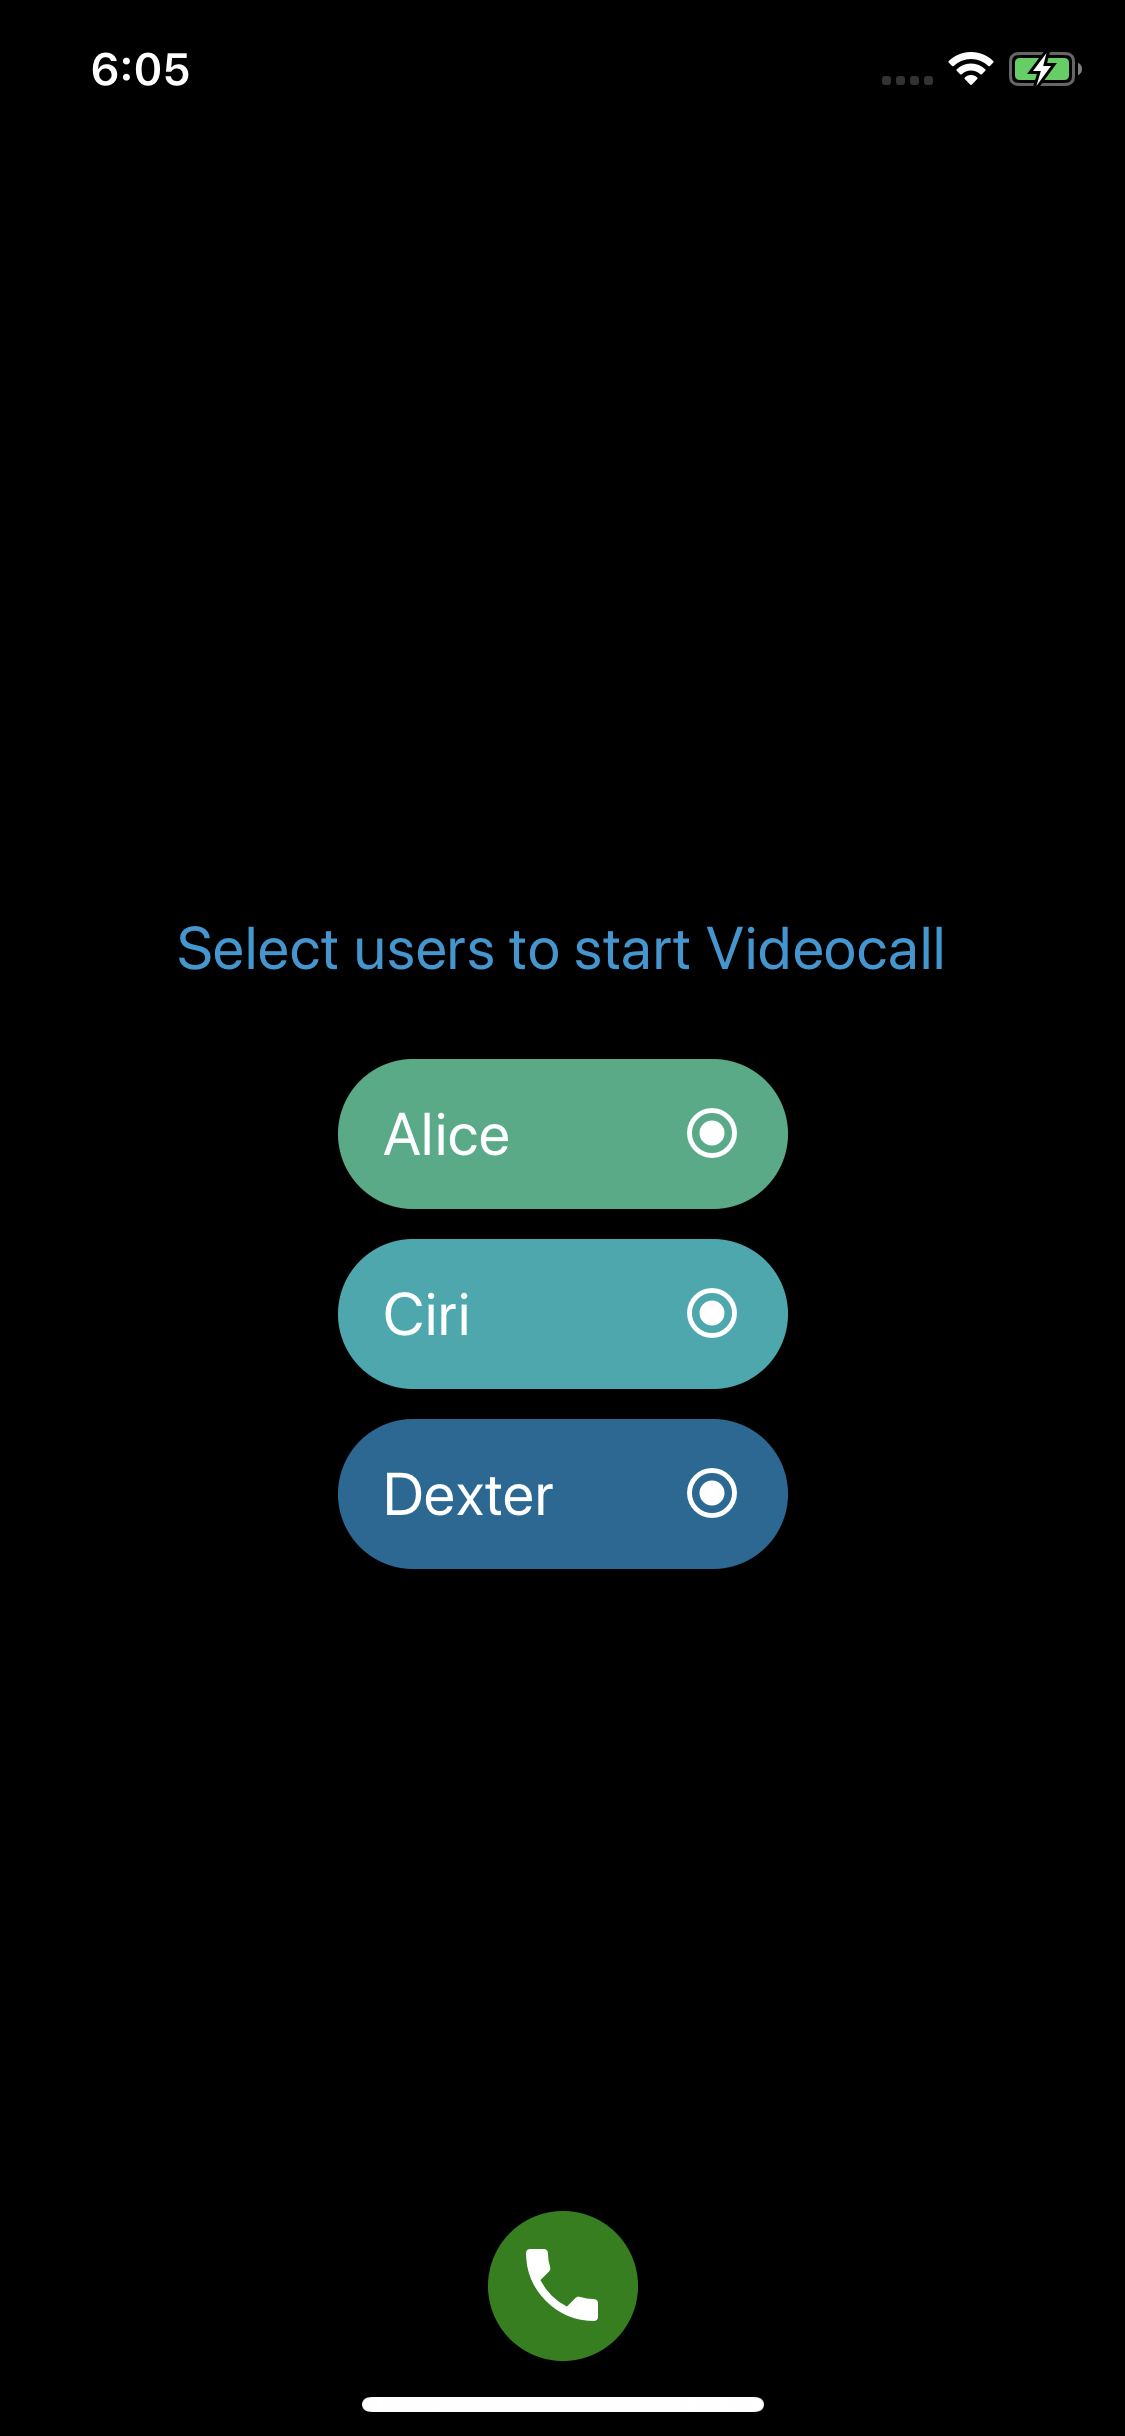 React Native video chat code sample, select